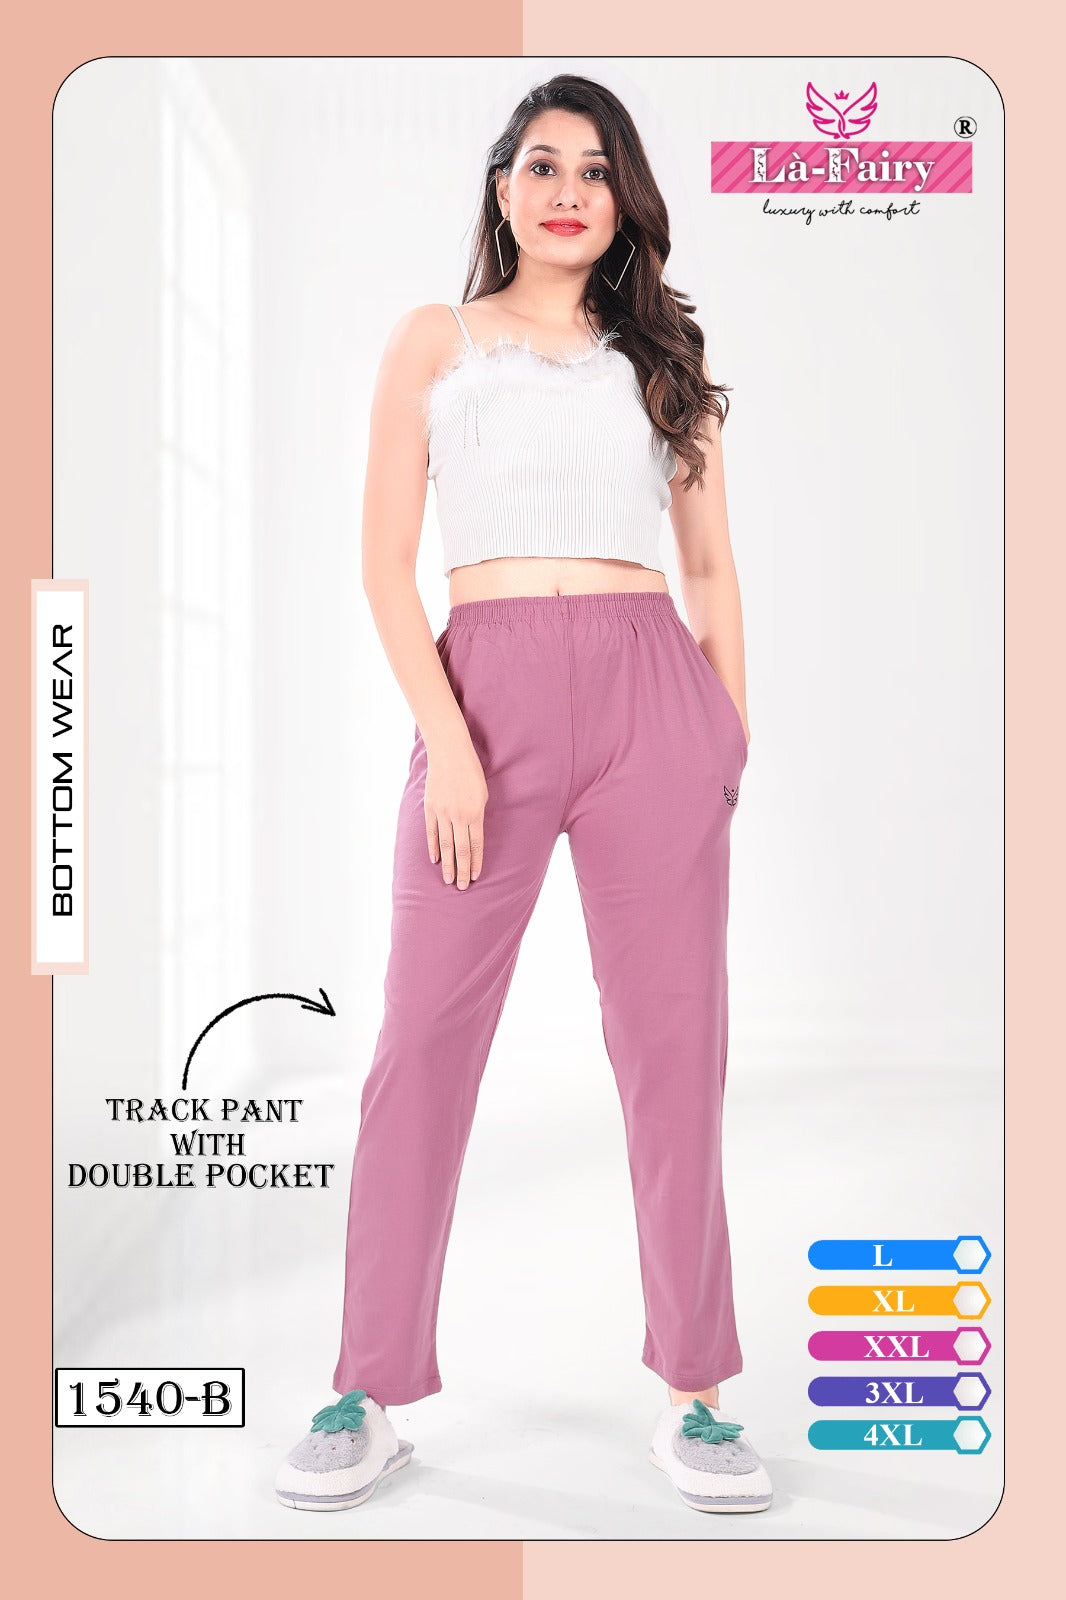 Mens Casual Fashion Track Pants With Elasticated Waistband side Pockets  Fabric Cotton.Hosiery - YouTube